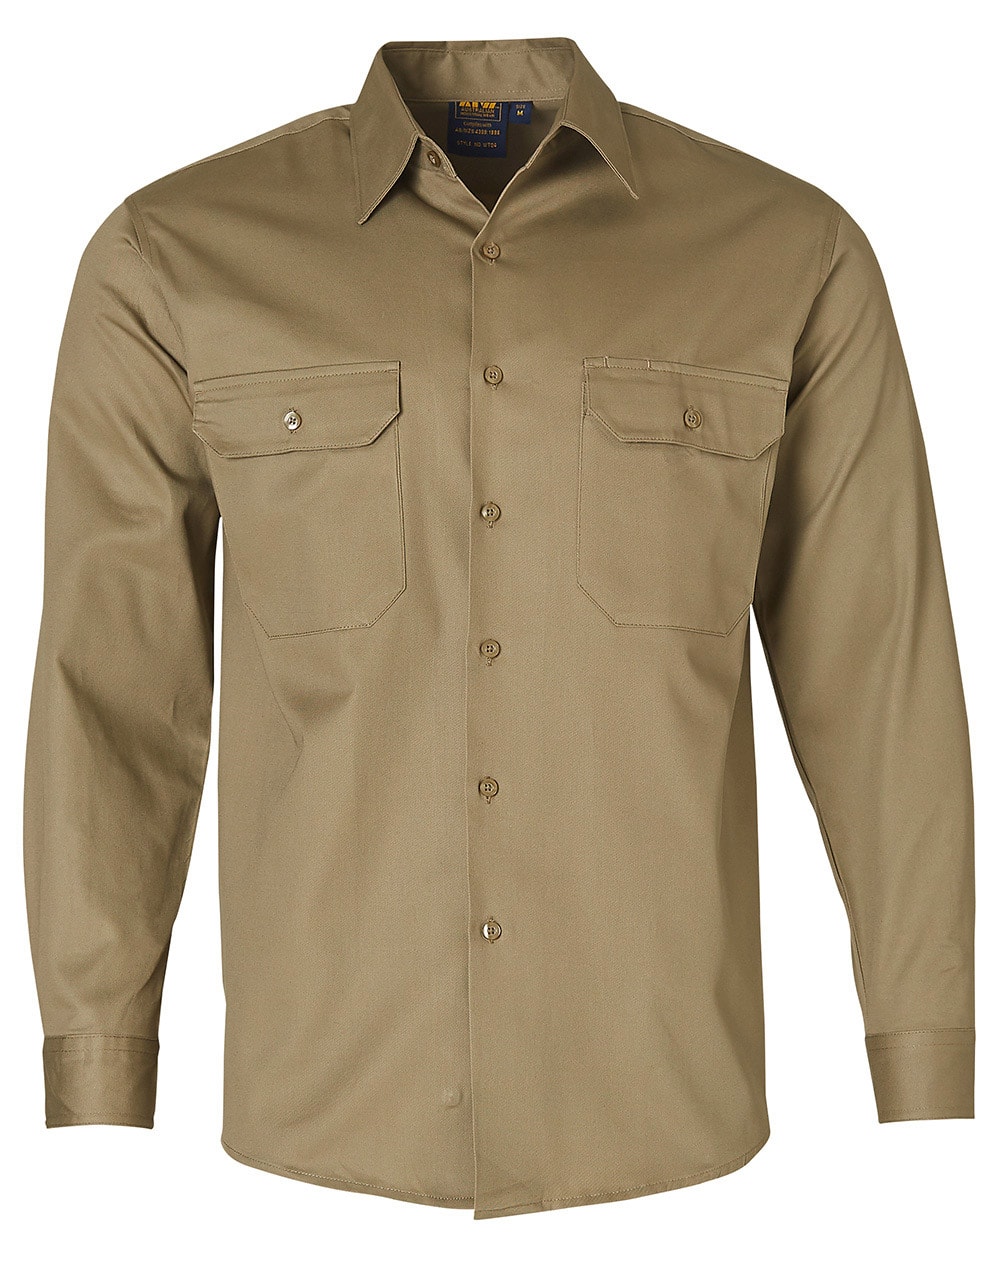 Cotton Drill Shirt Long Sleeve | At-Call Safety